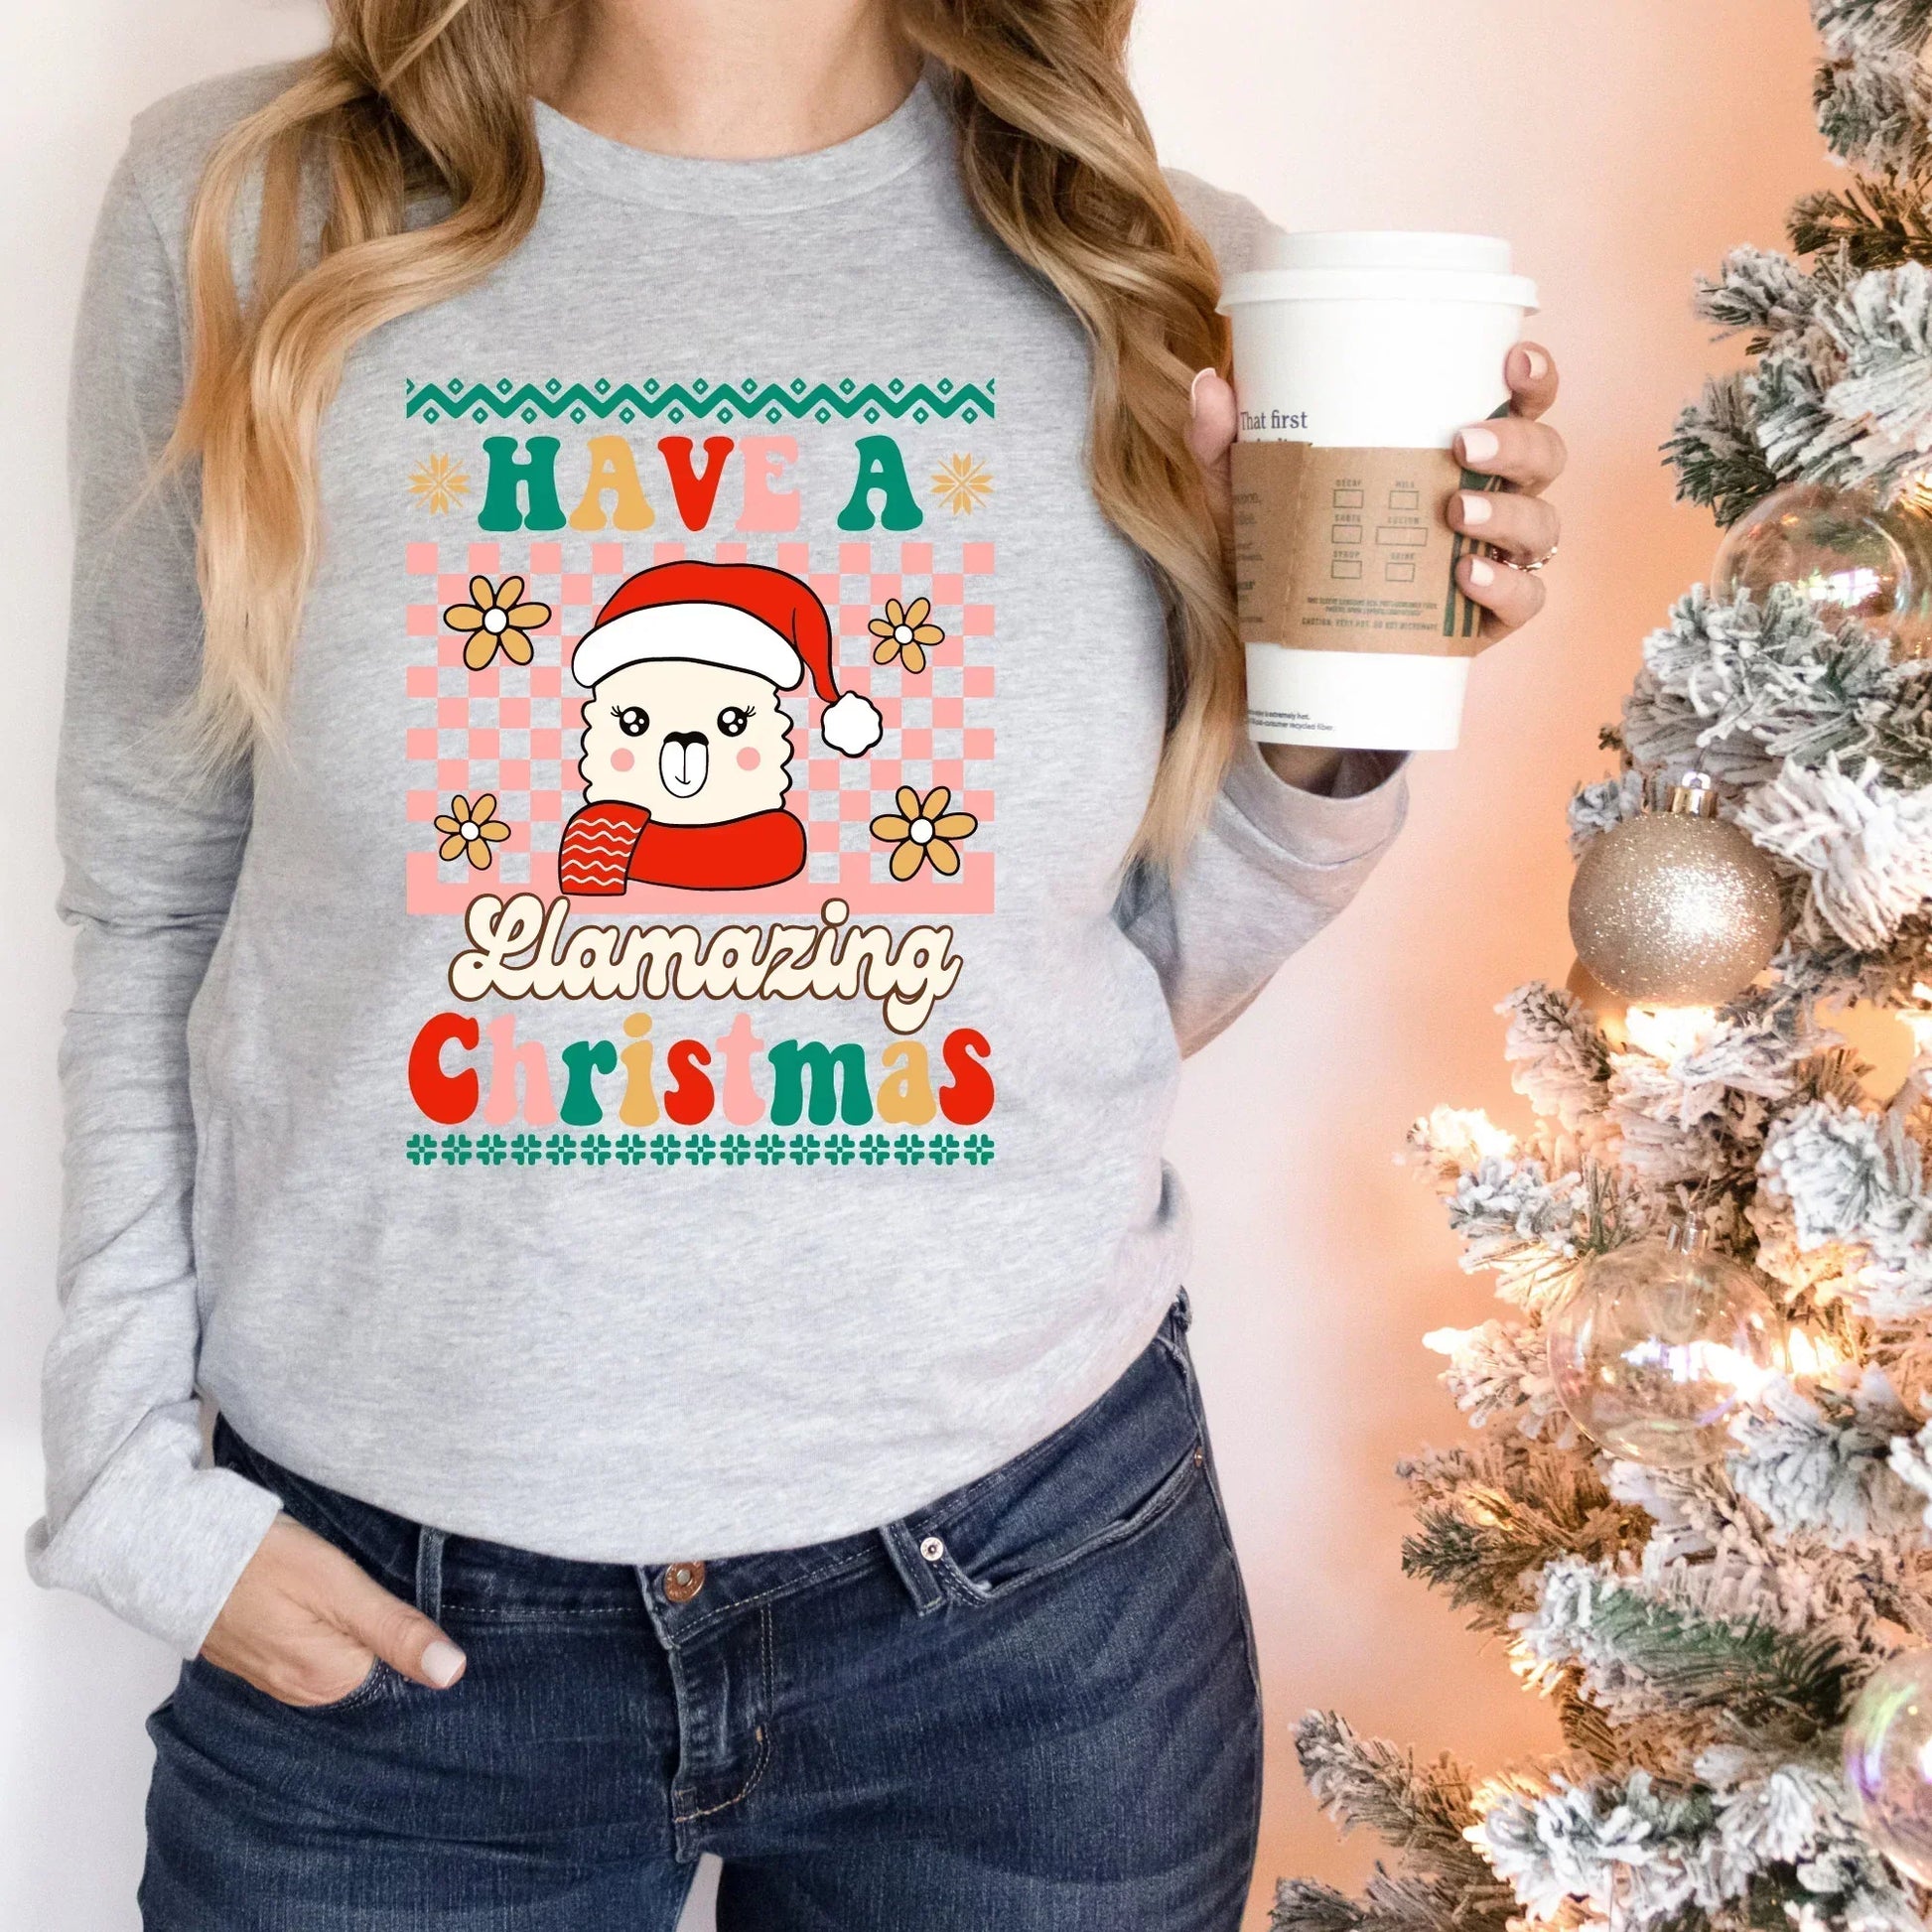 Llama Ugly Christmas Sweater, Cute Christmas Sweatshirt, Retro Christmas Shirt for Her, Xmas Gift for Him, Comfort Colors Oversized Tee HMDesignStudioUS